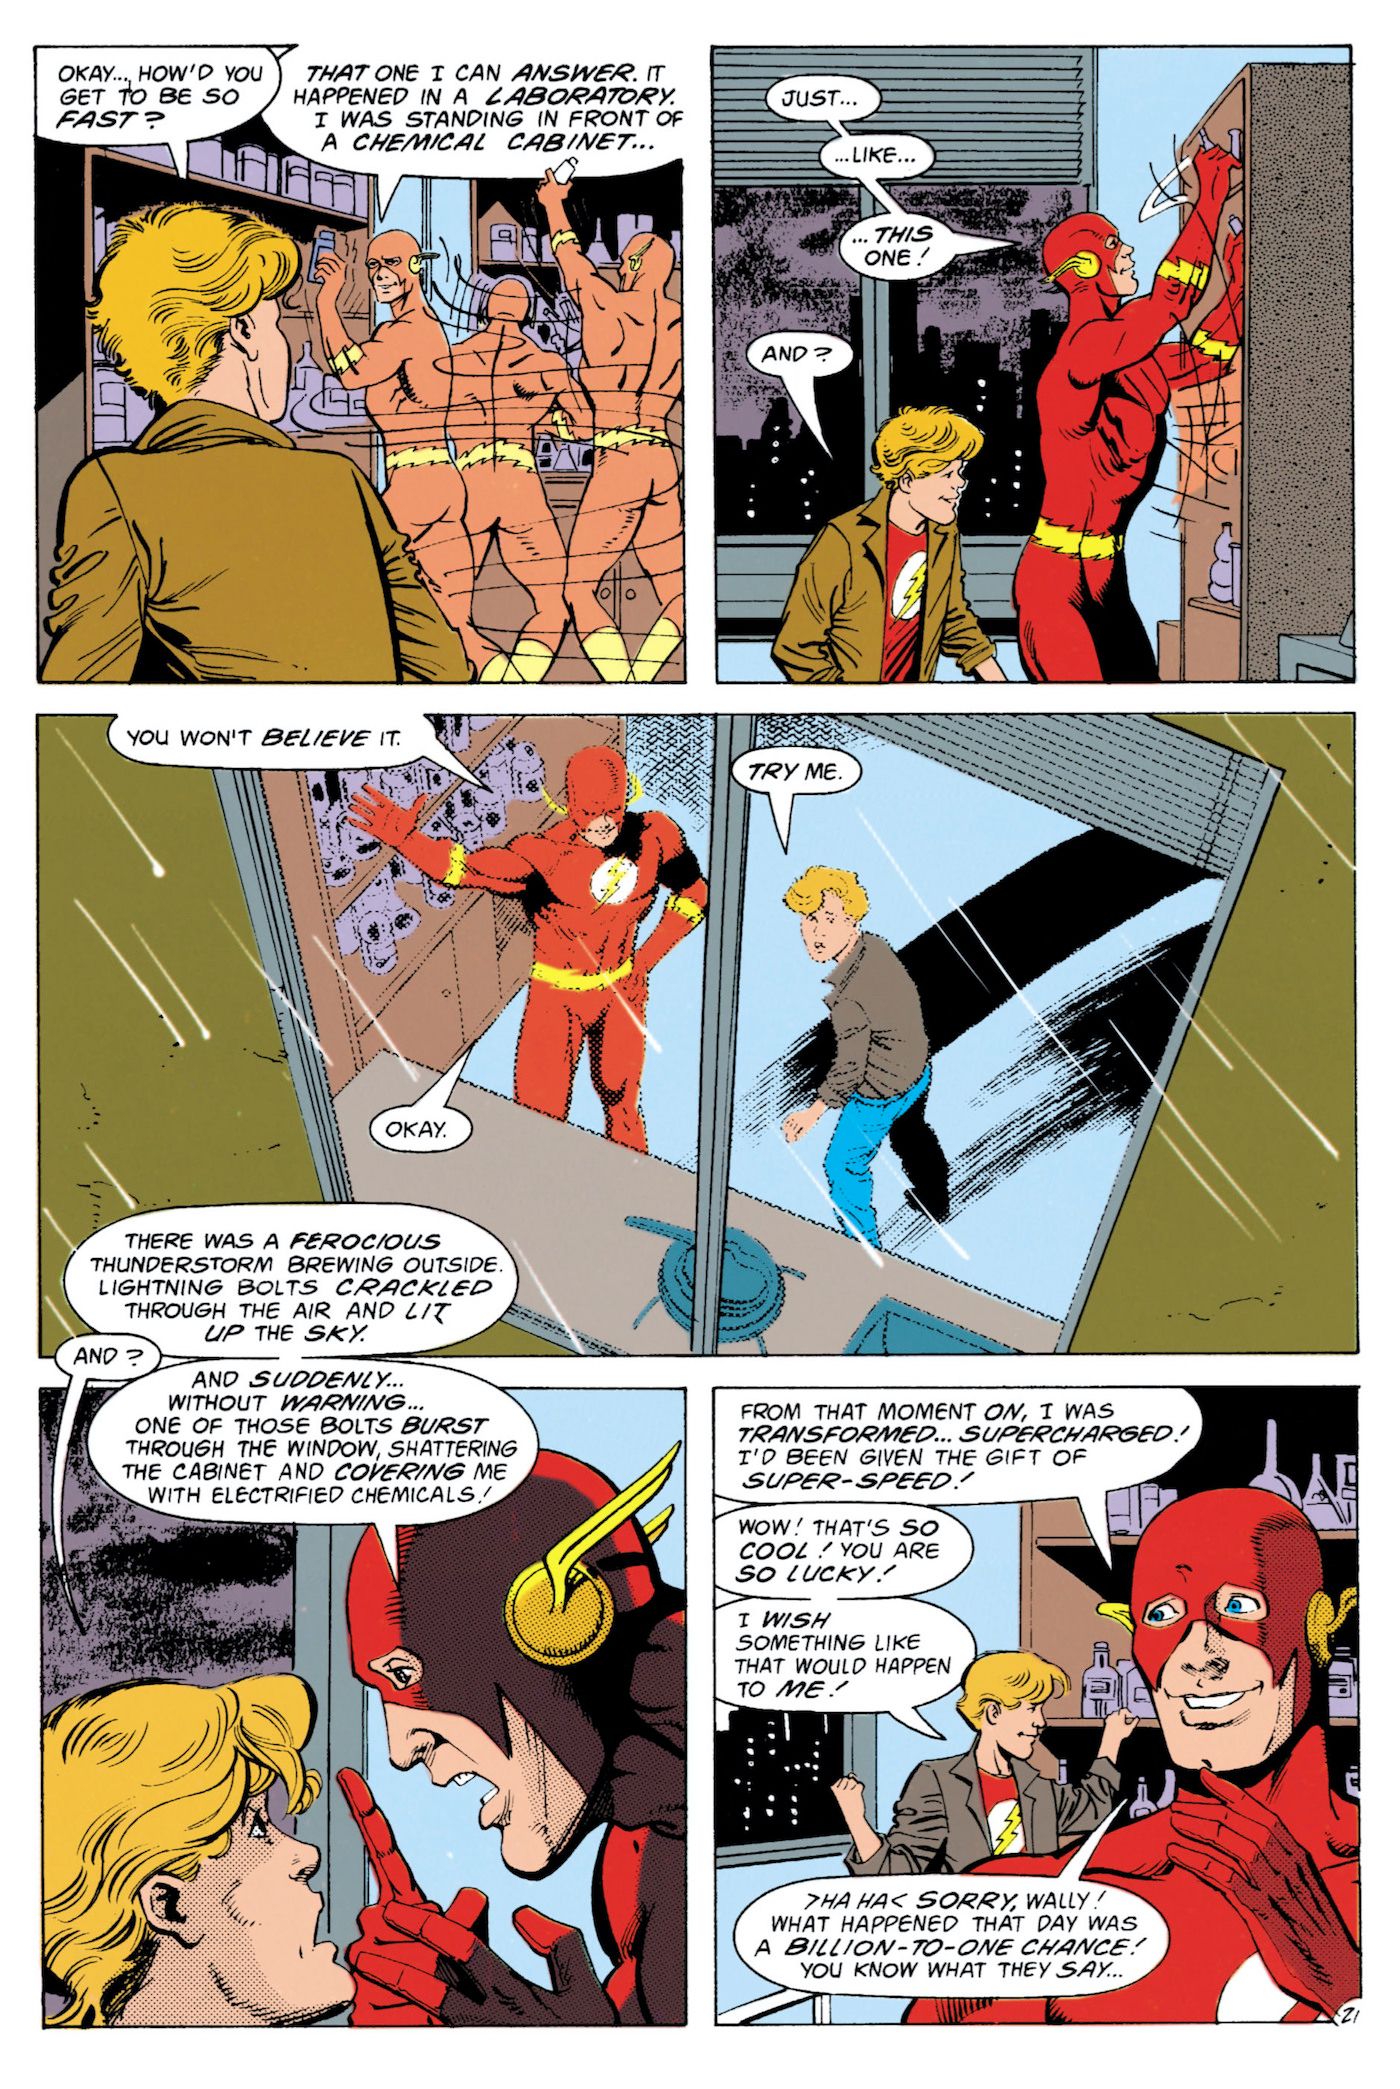 Barry Allen meets Wally West